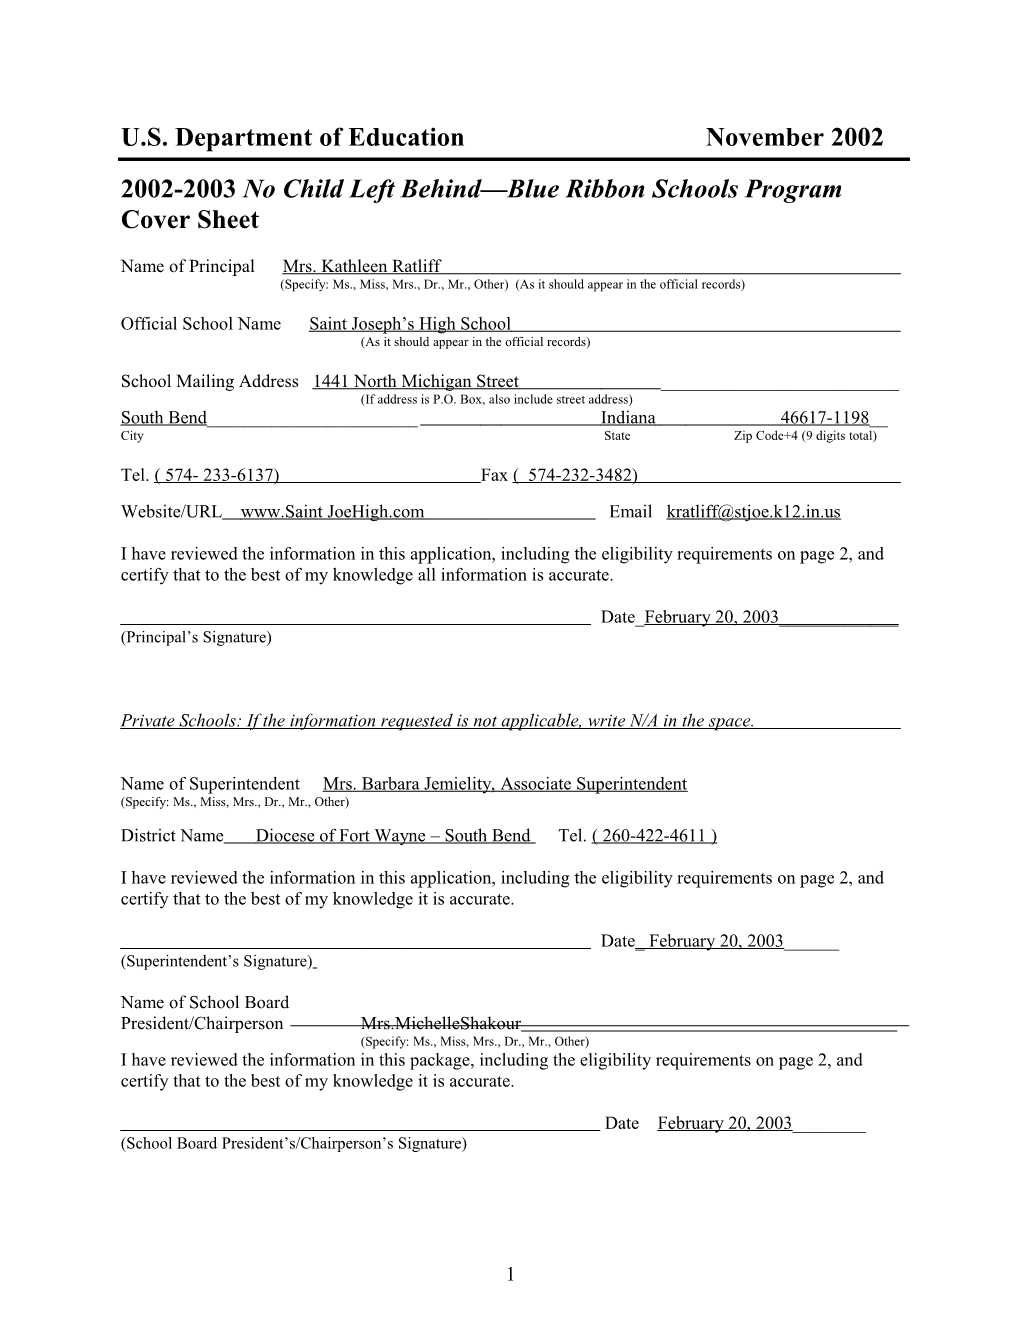 Saint Joseph's High School 2003 No Child Left Behind-Blue Ribbon School (Msword)